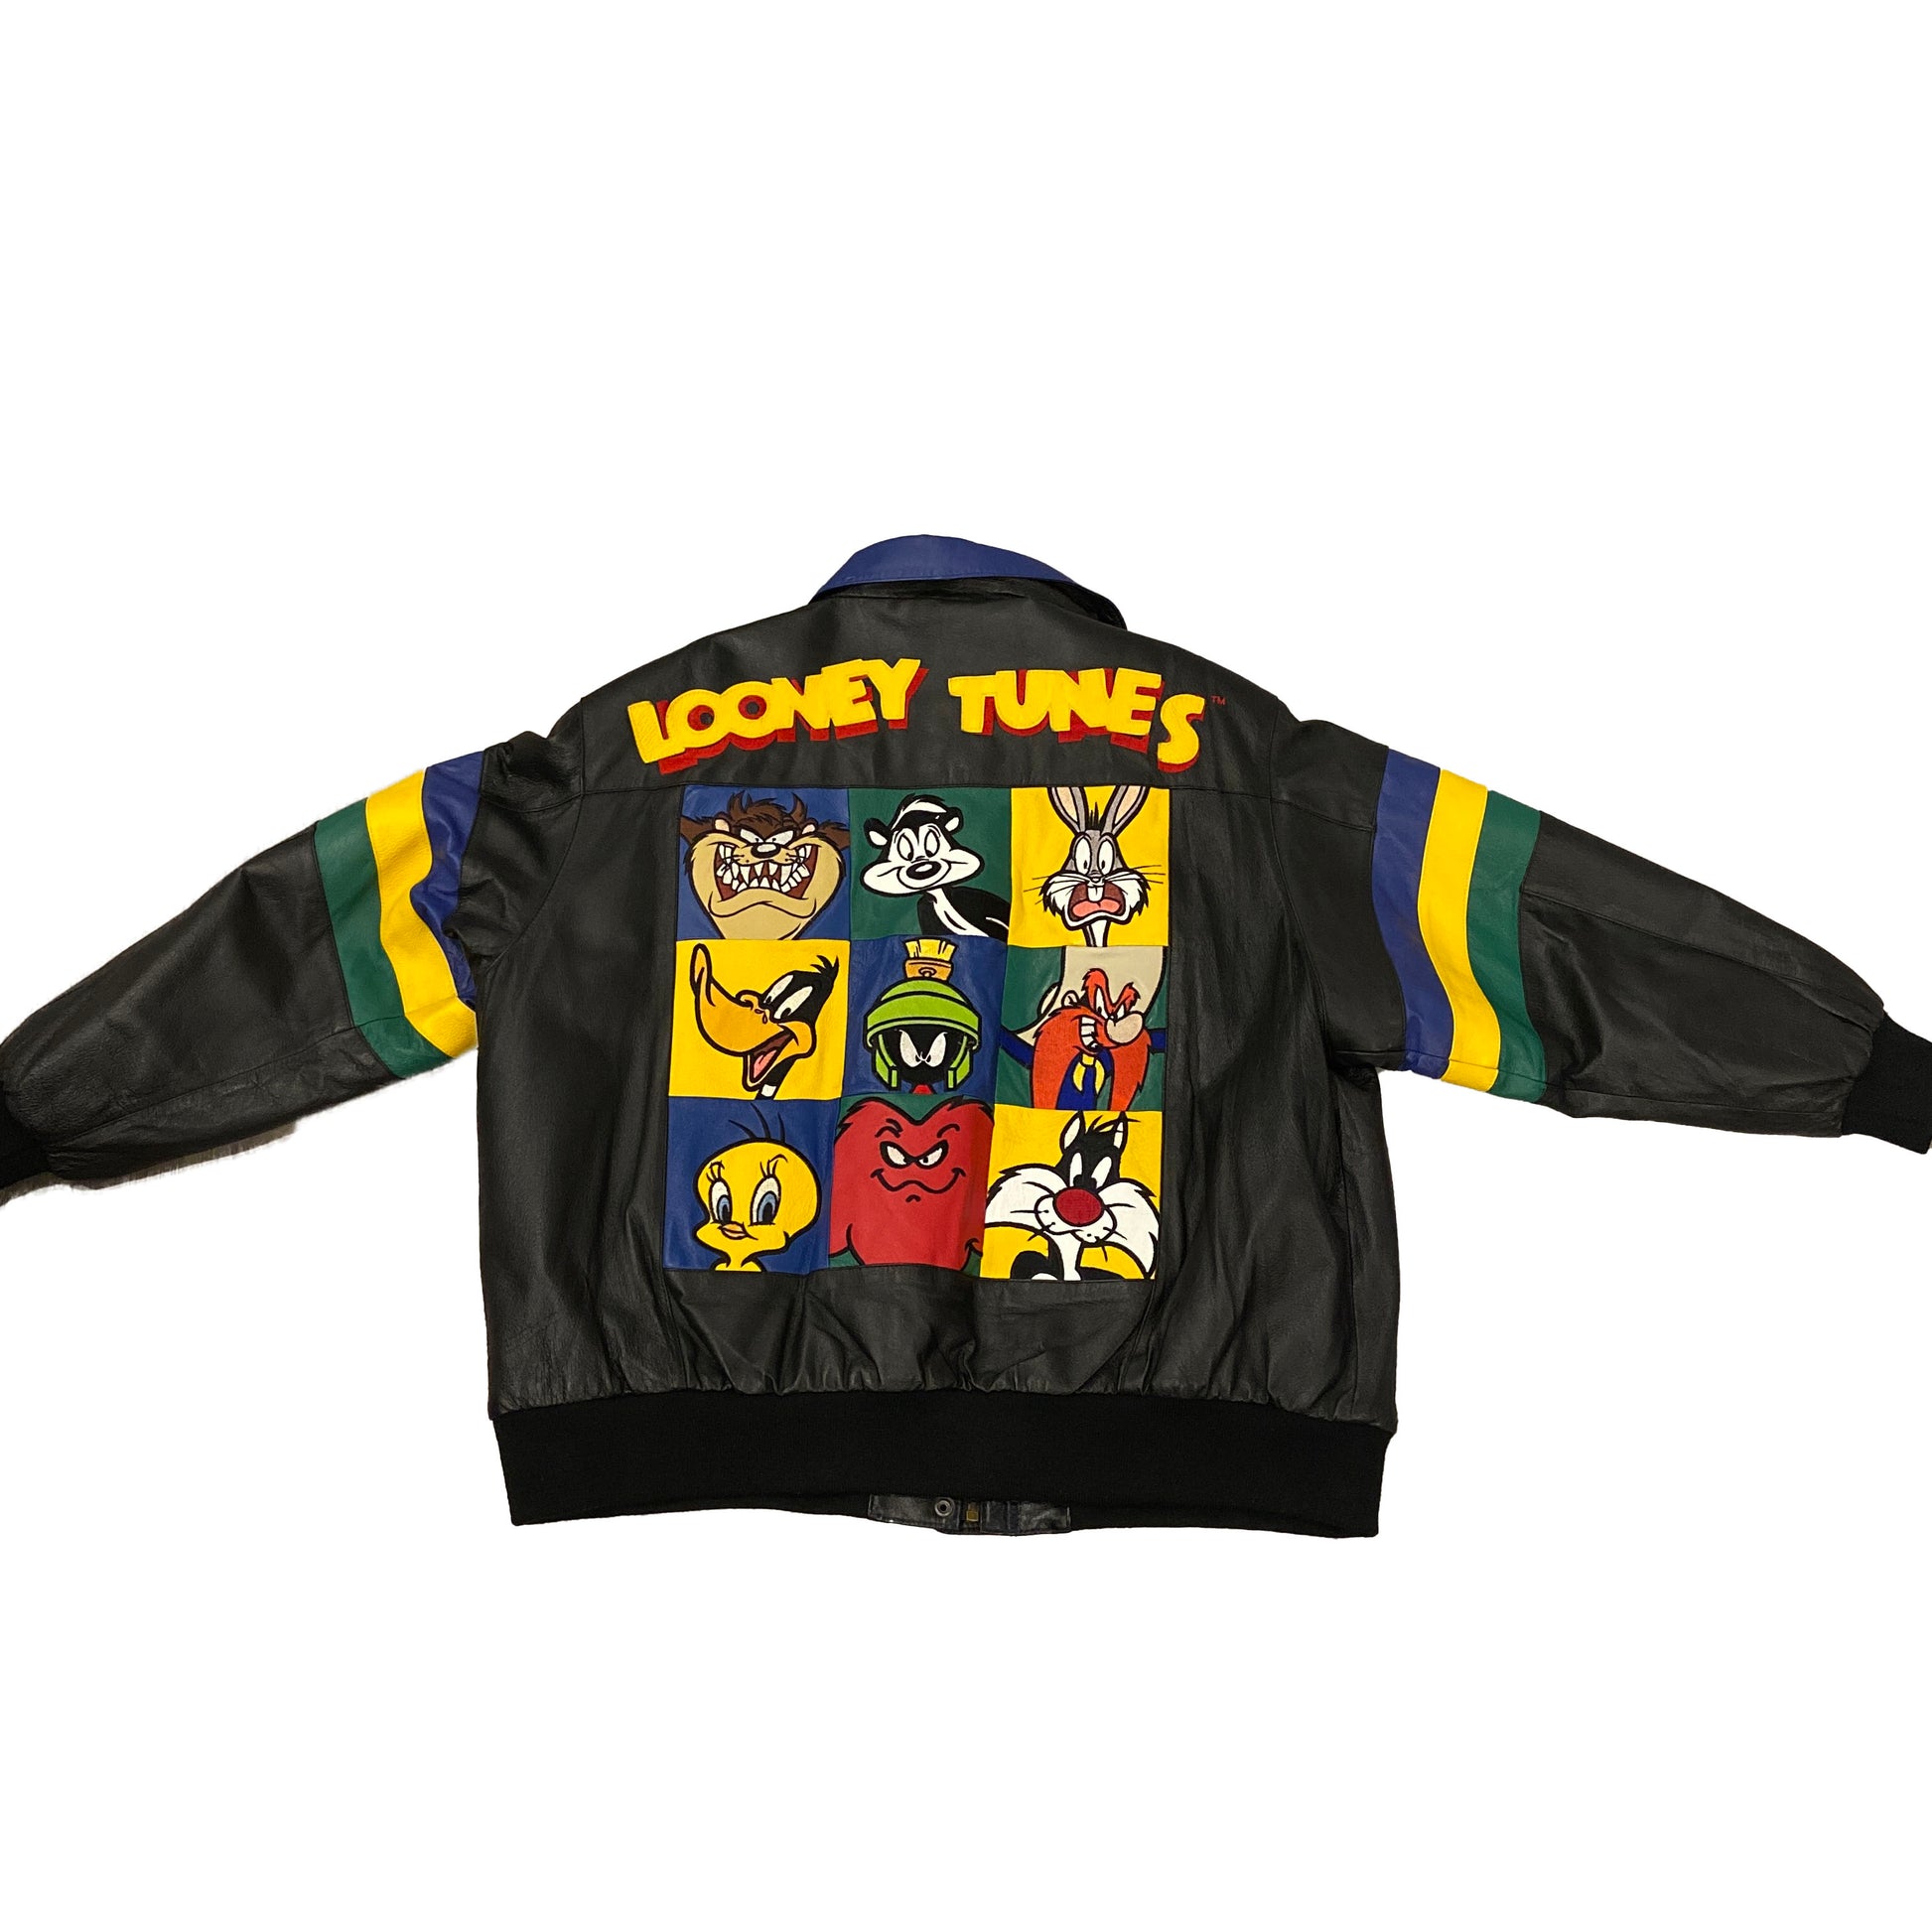 Vintage 90s Looney Tunes varsity style leather bomber jacket